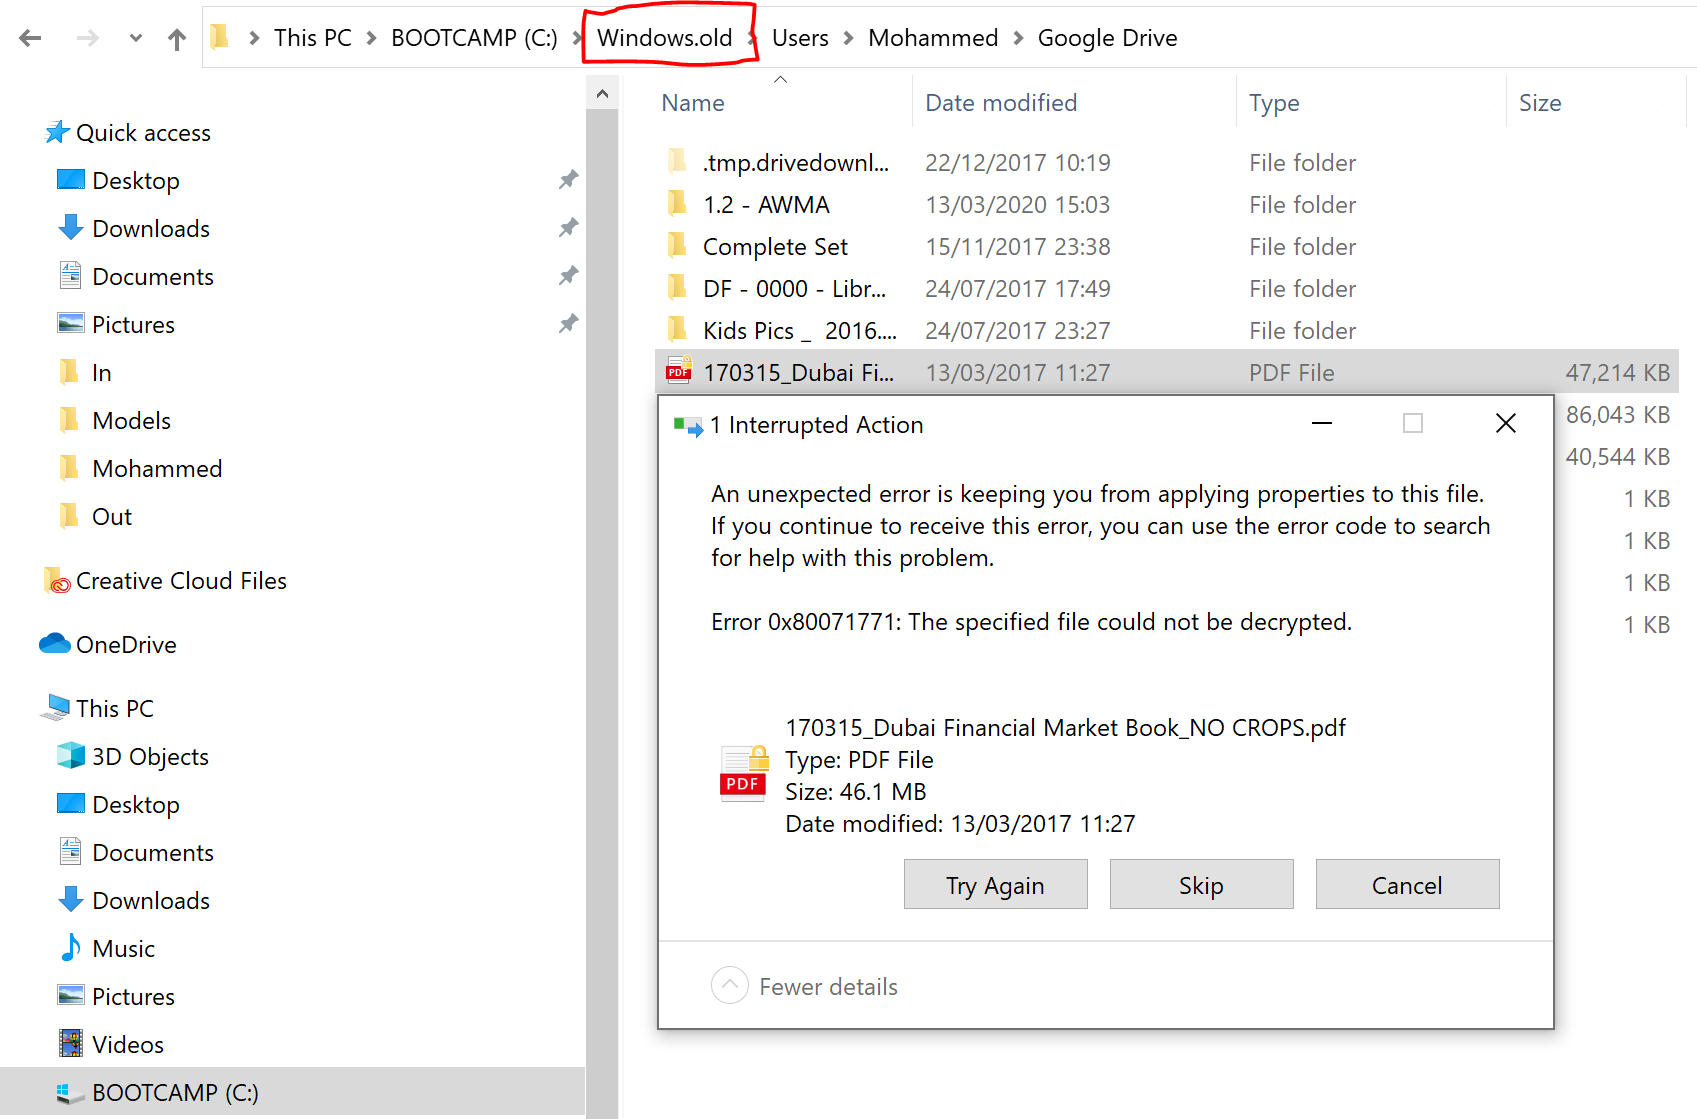 Files locked after windows 10 update 35ad5edd-648c-41e0-923b-505d602e41dd?upload=true.png